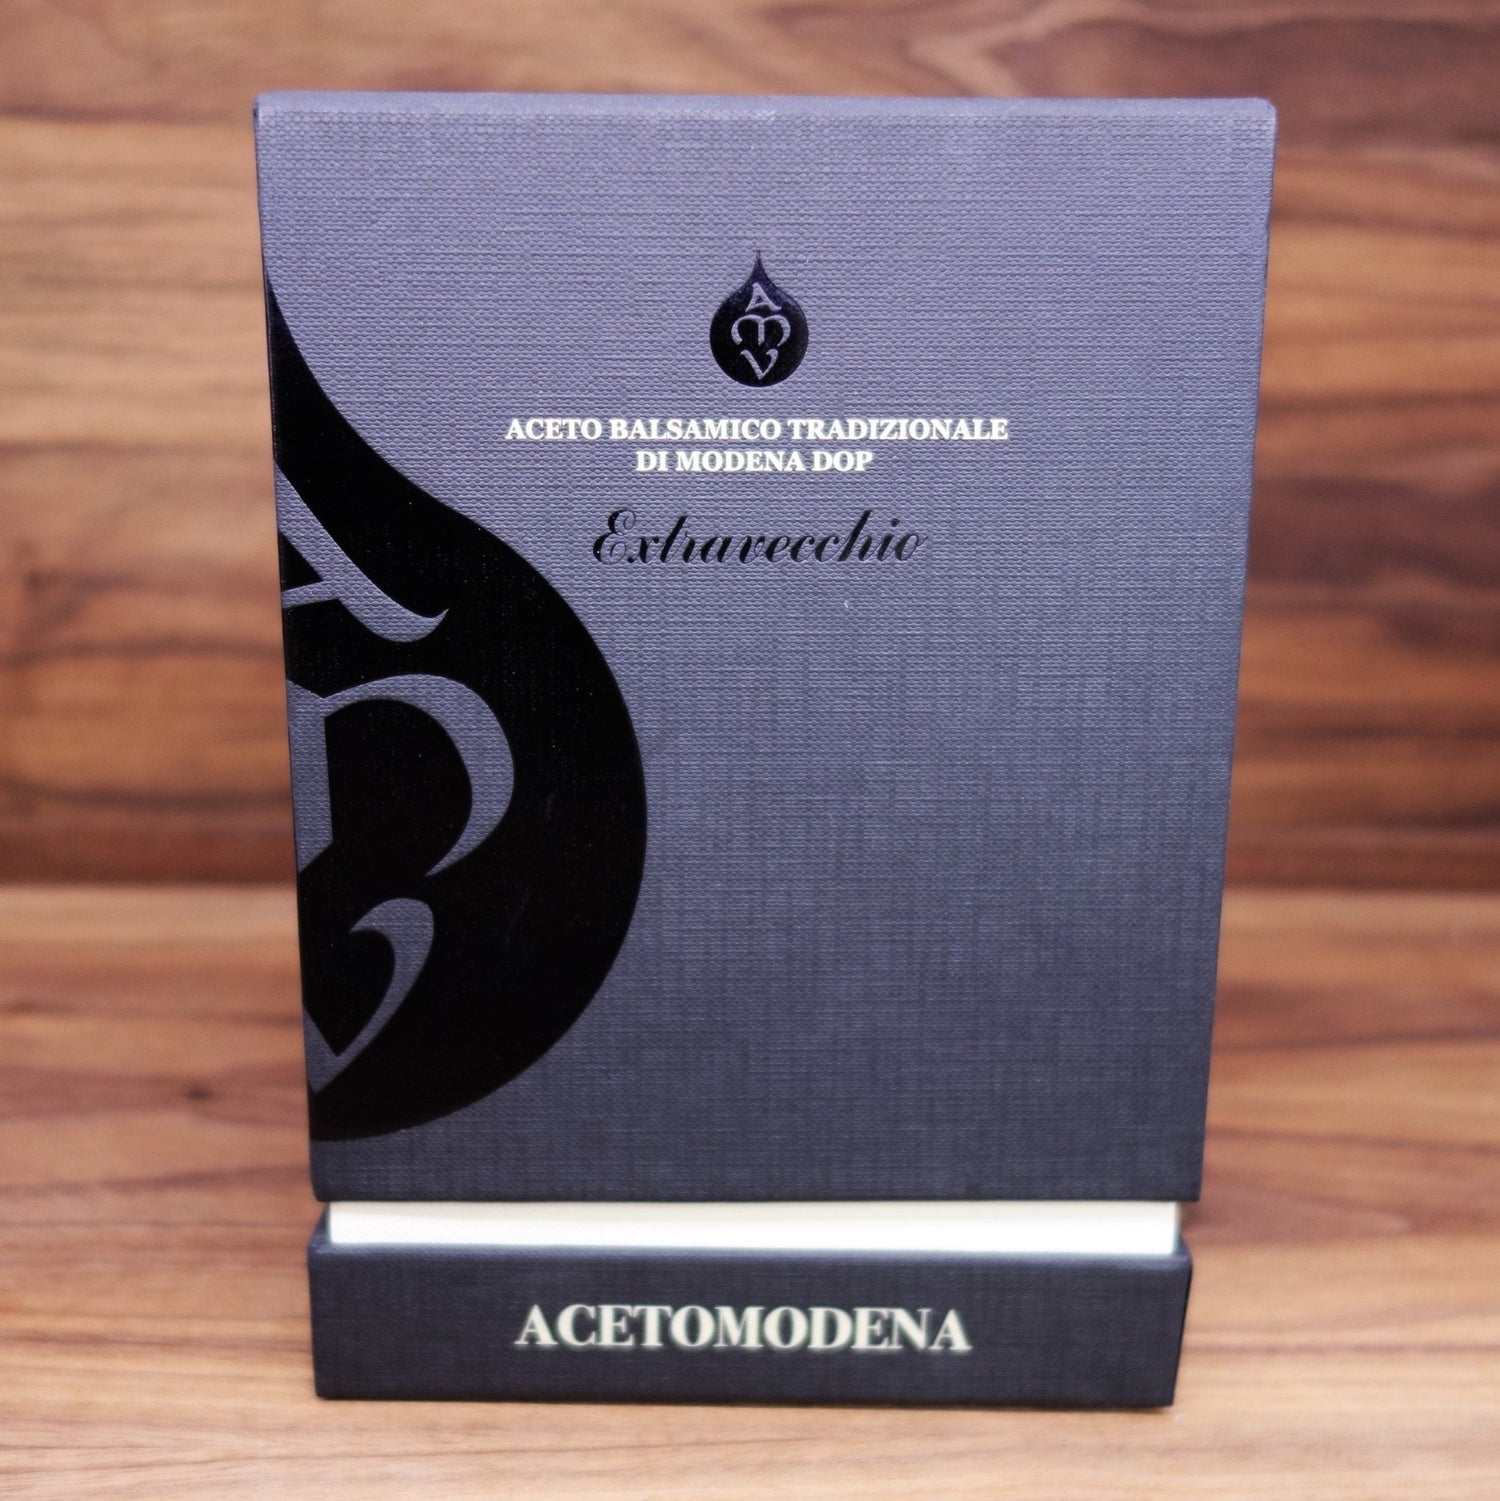 Acetomodena Extra Vecchio Balsamic 25 Year - Mongers' Provisions